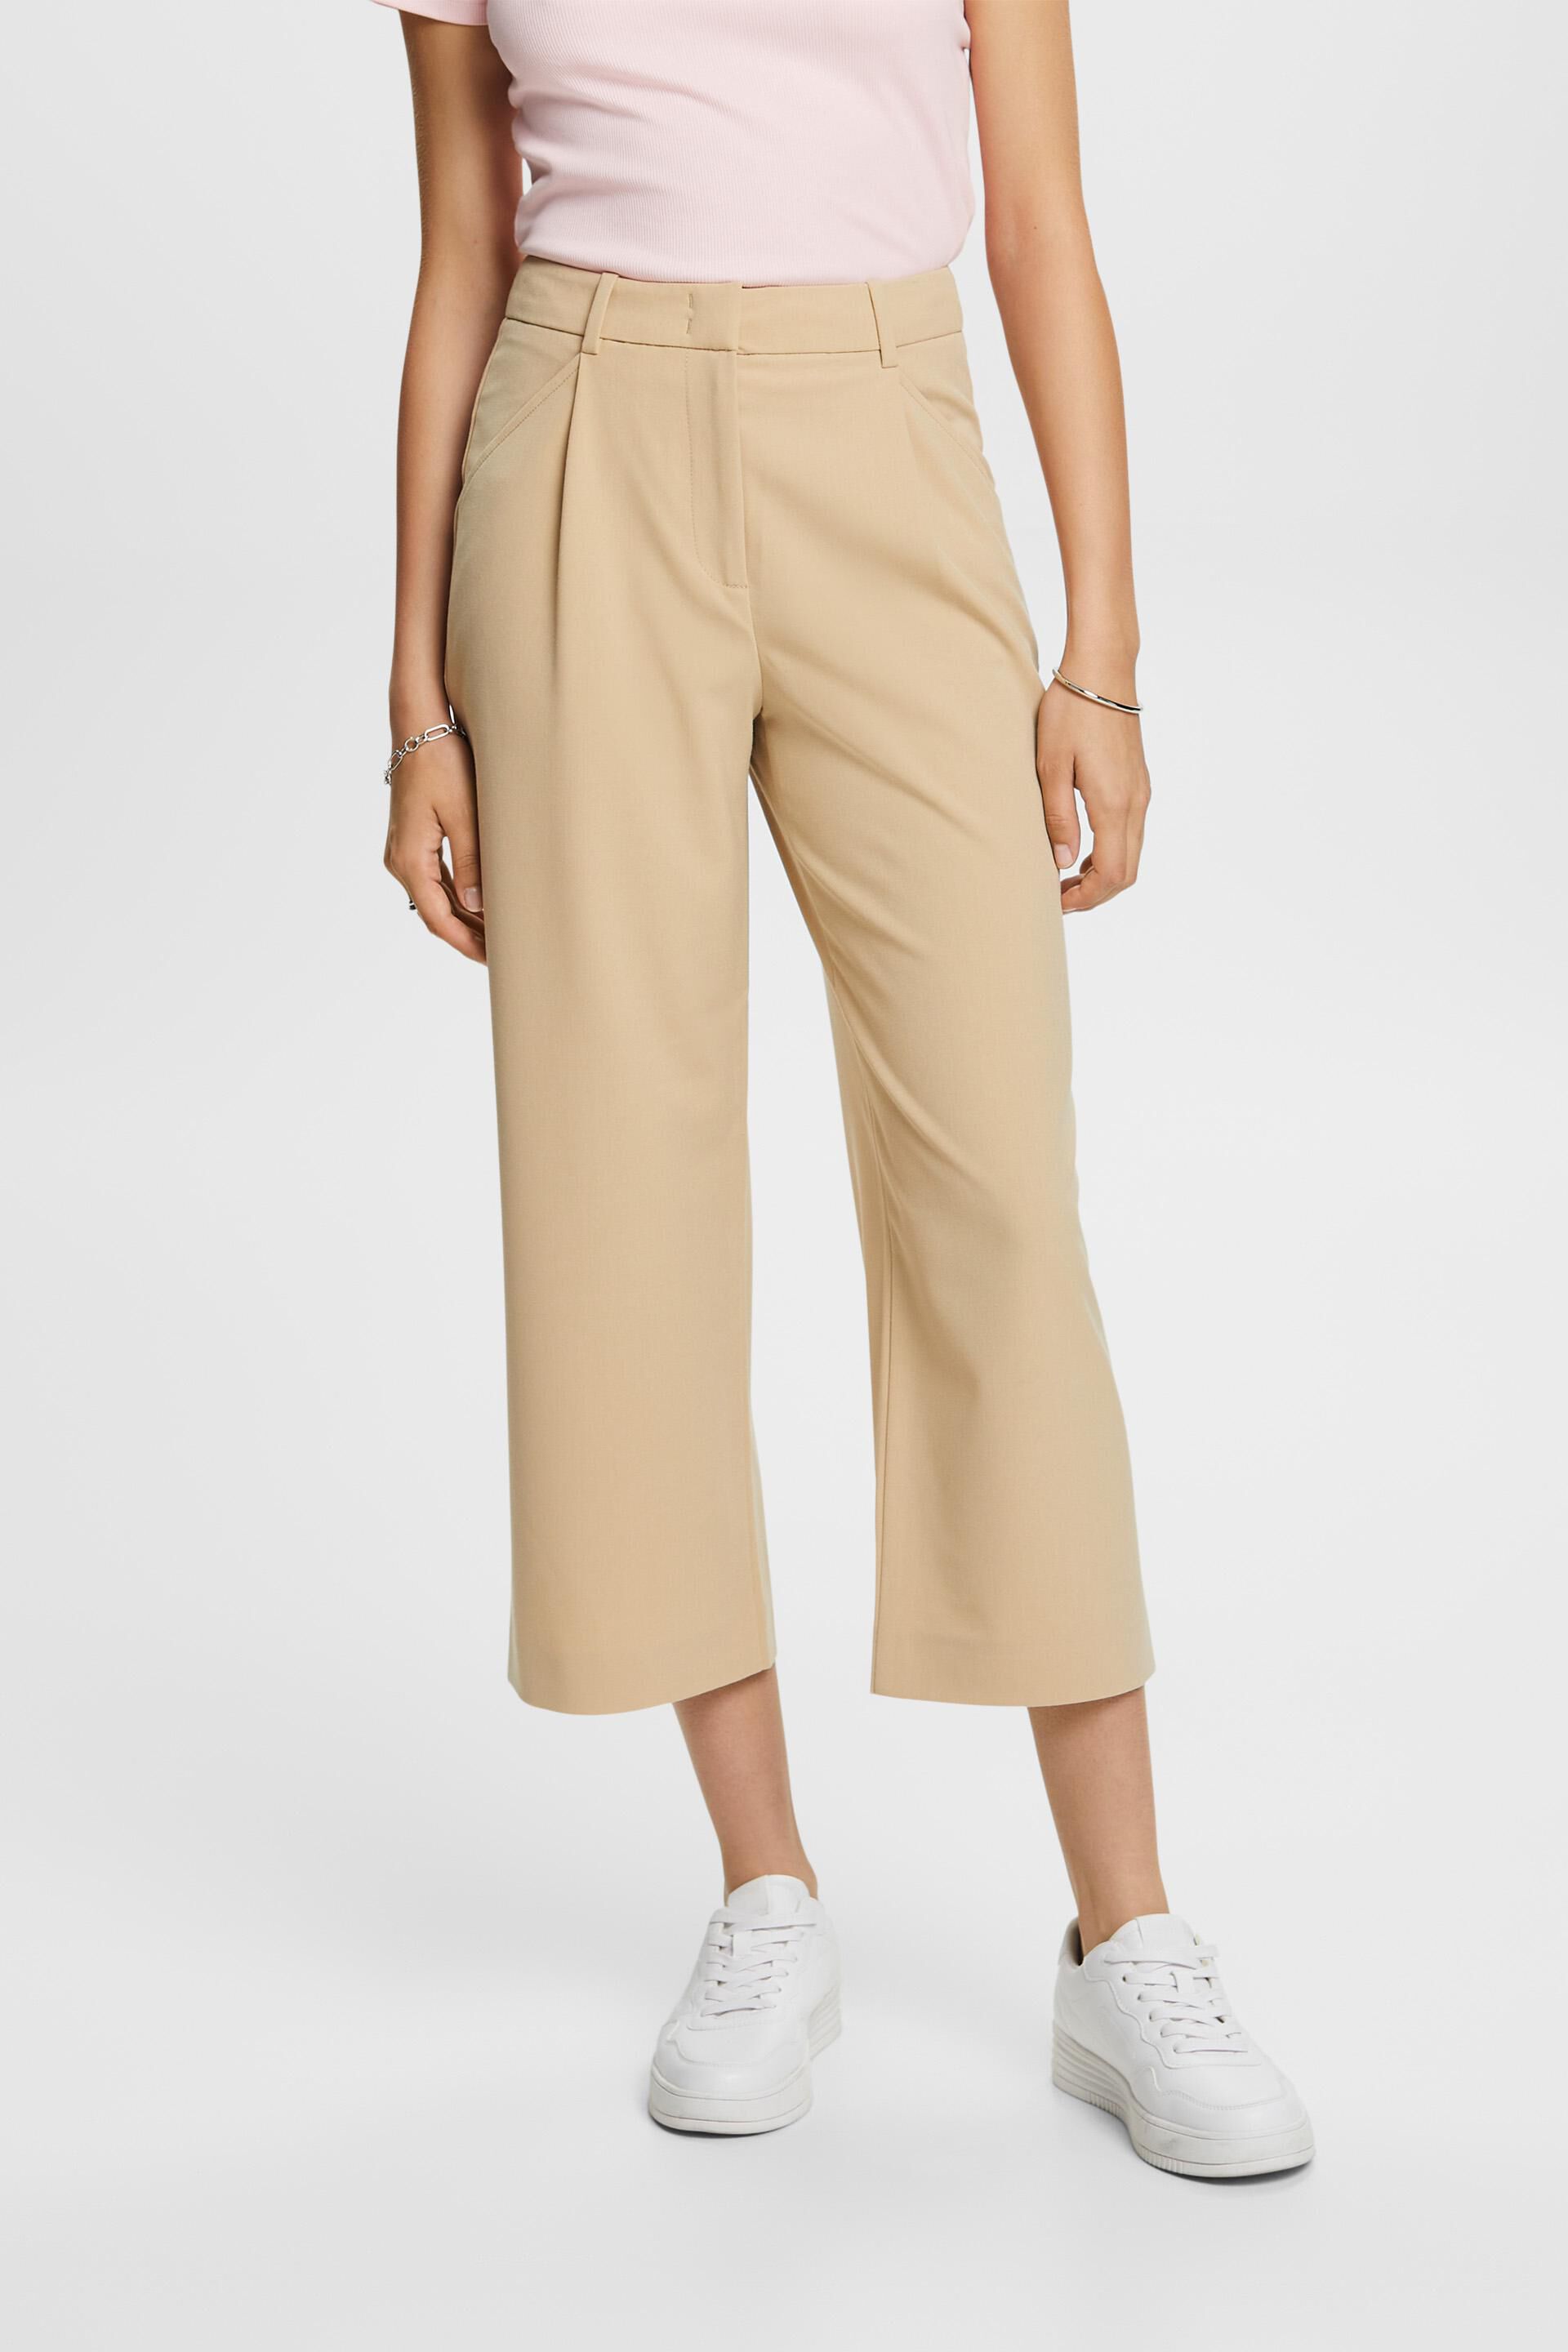 Esprit Damen High-rise culottes with pleats waist